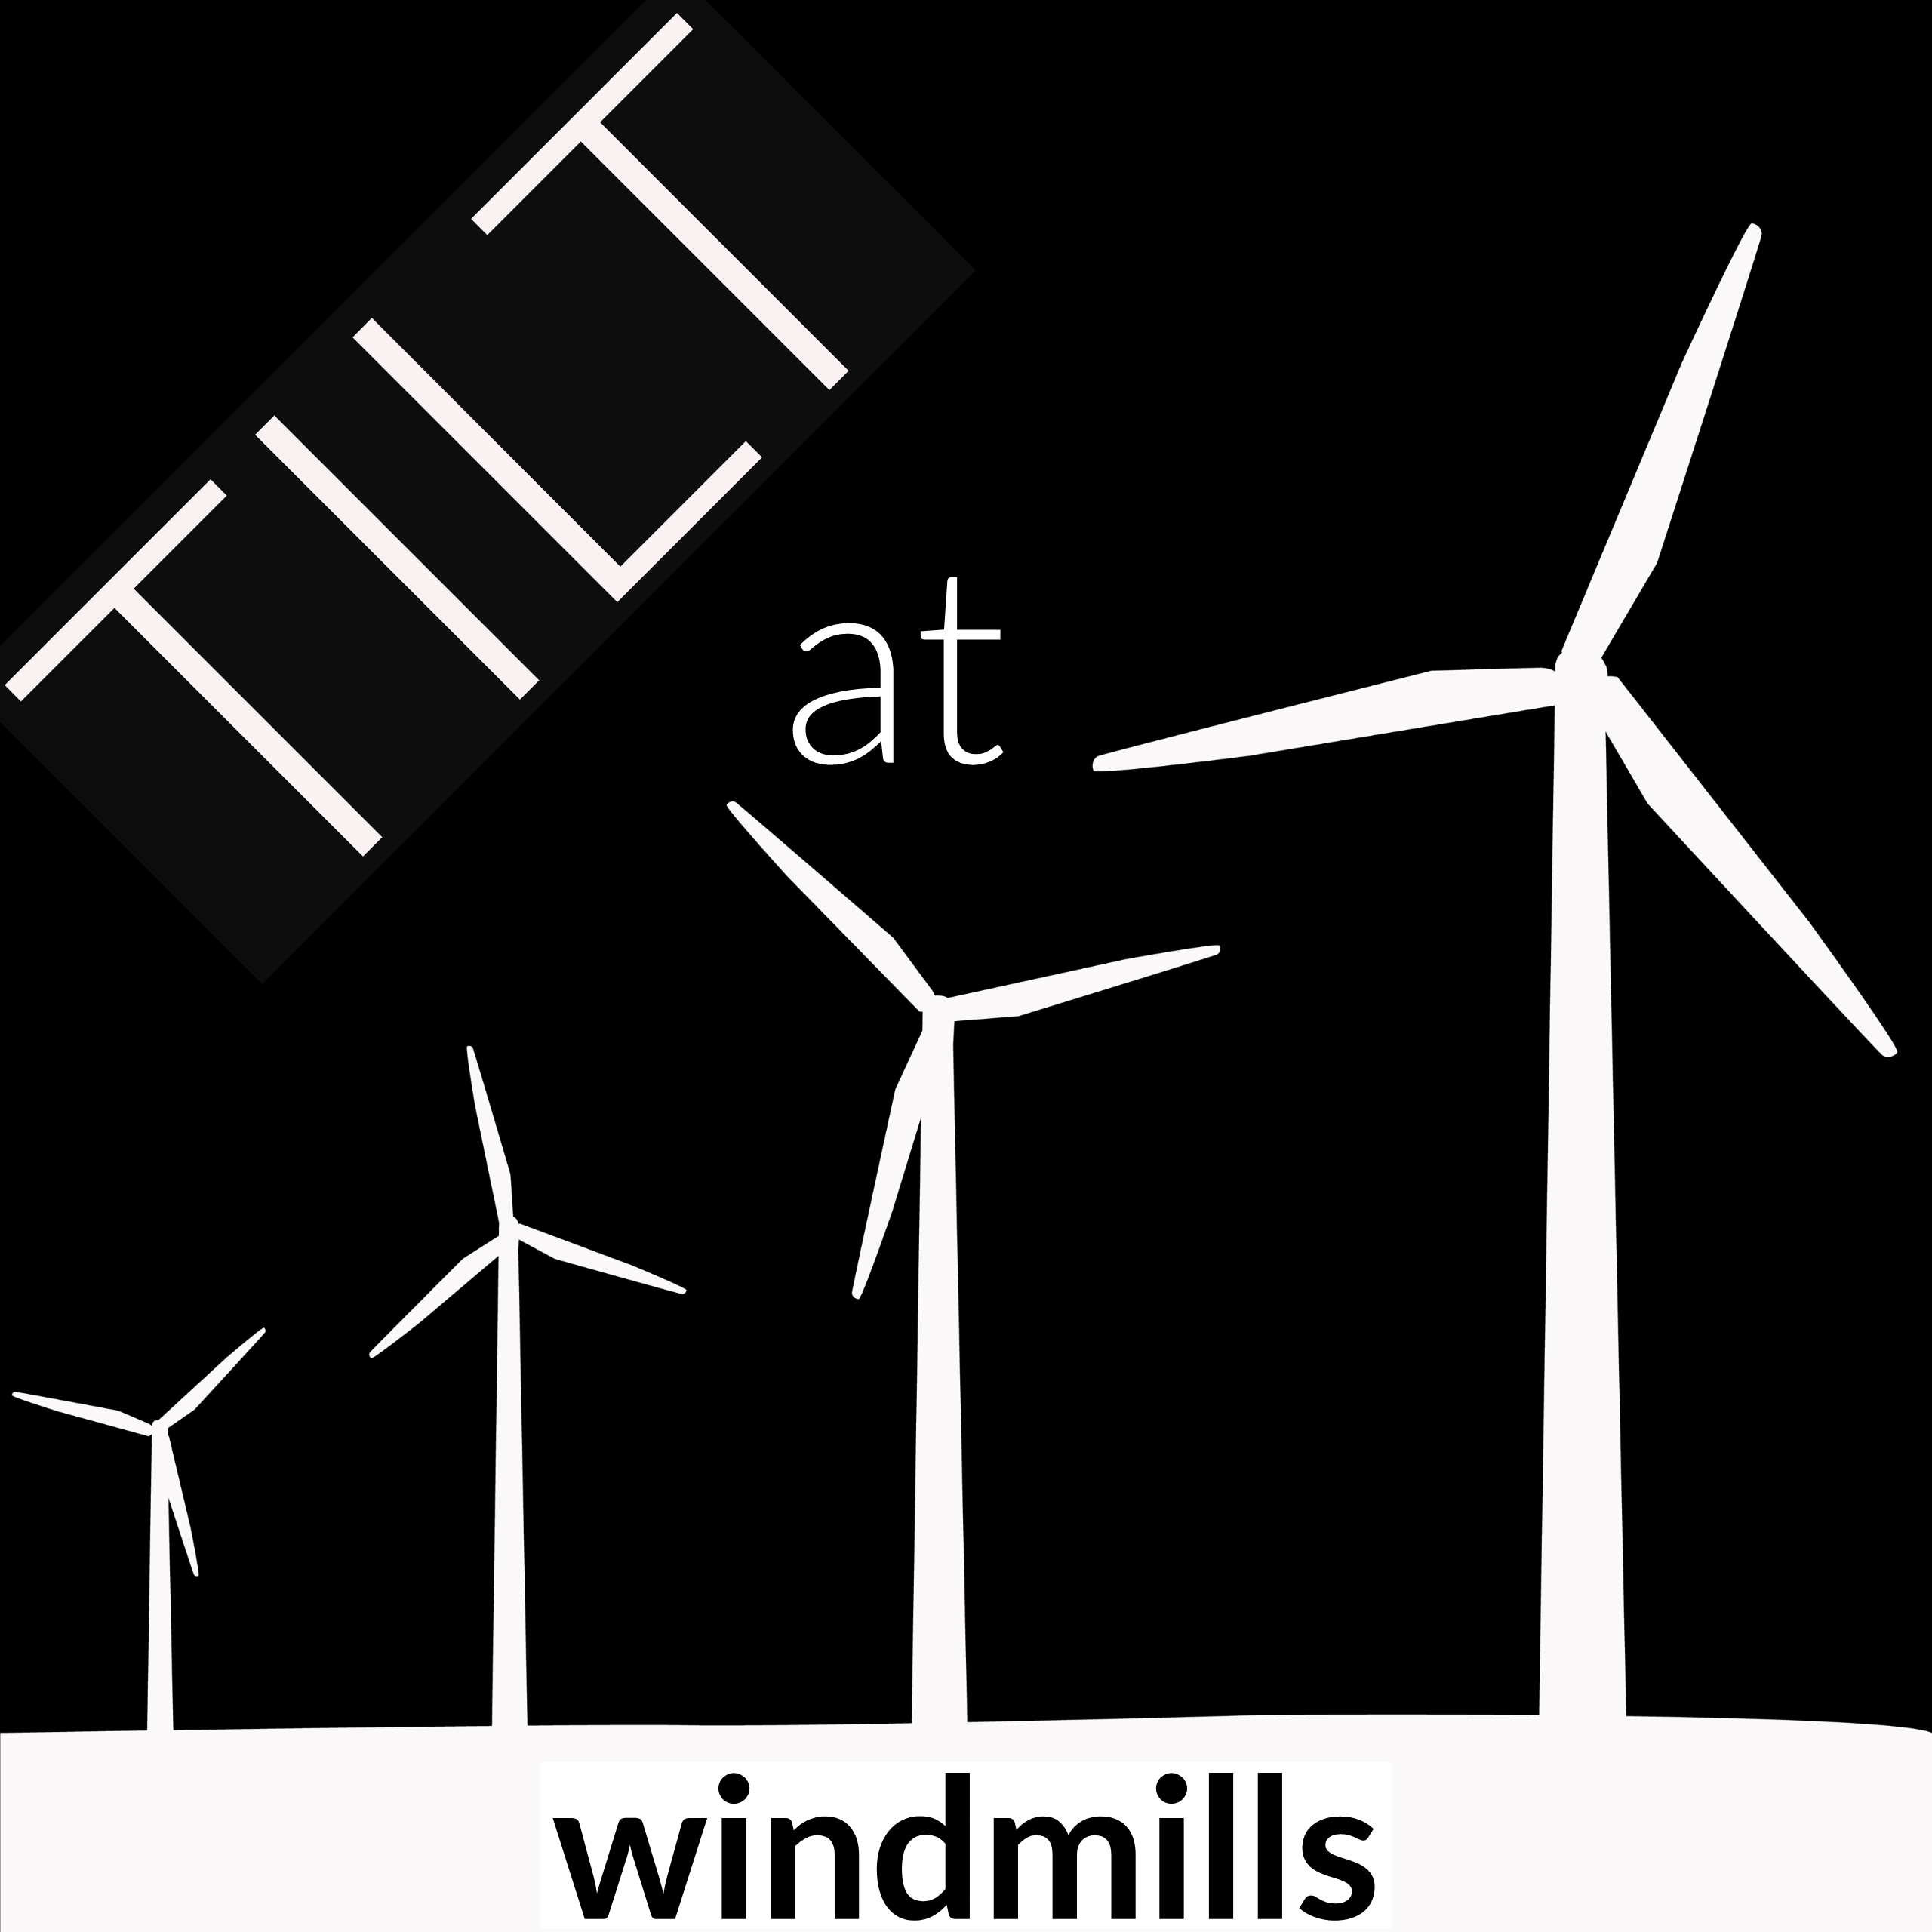 Artwork for podcast Tilting at Windmills